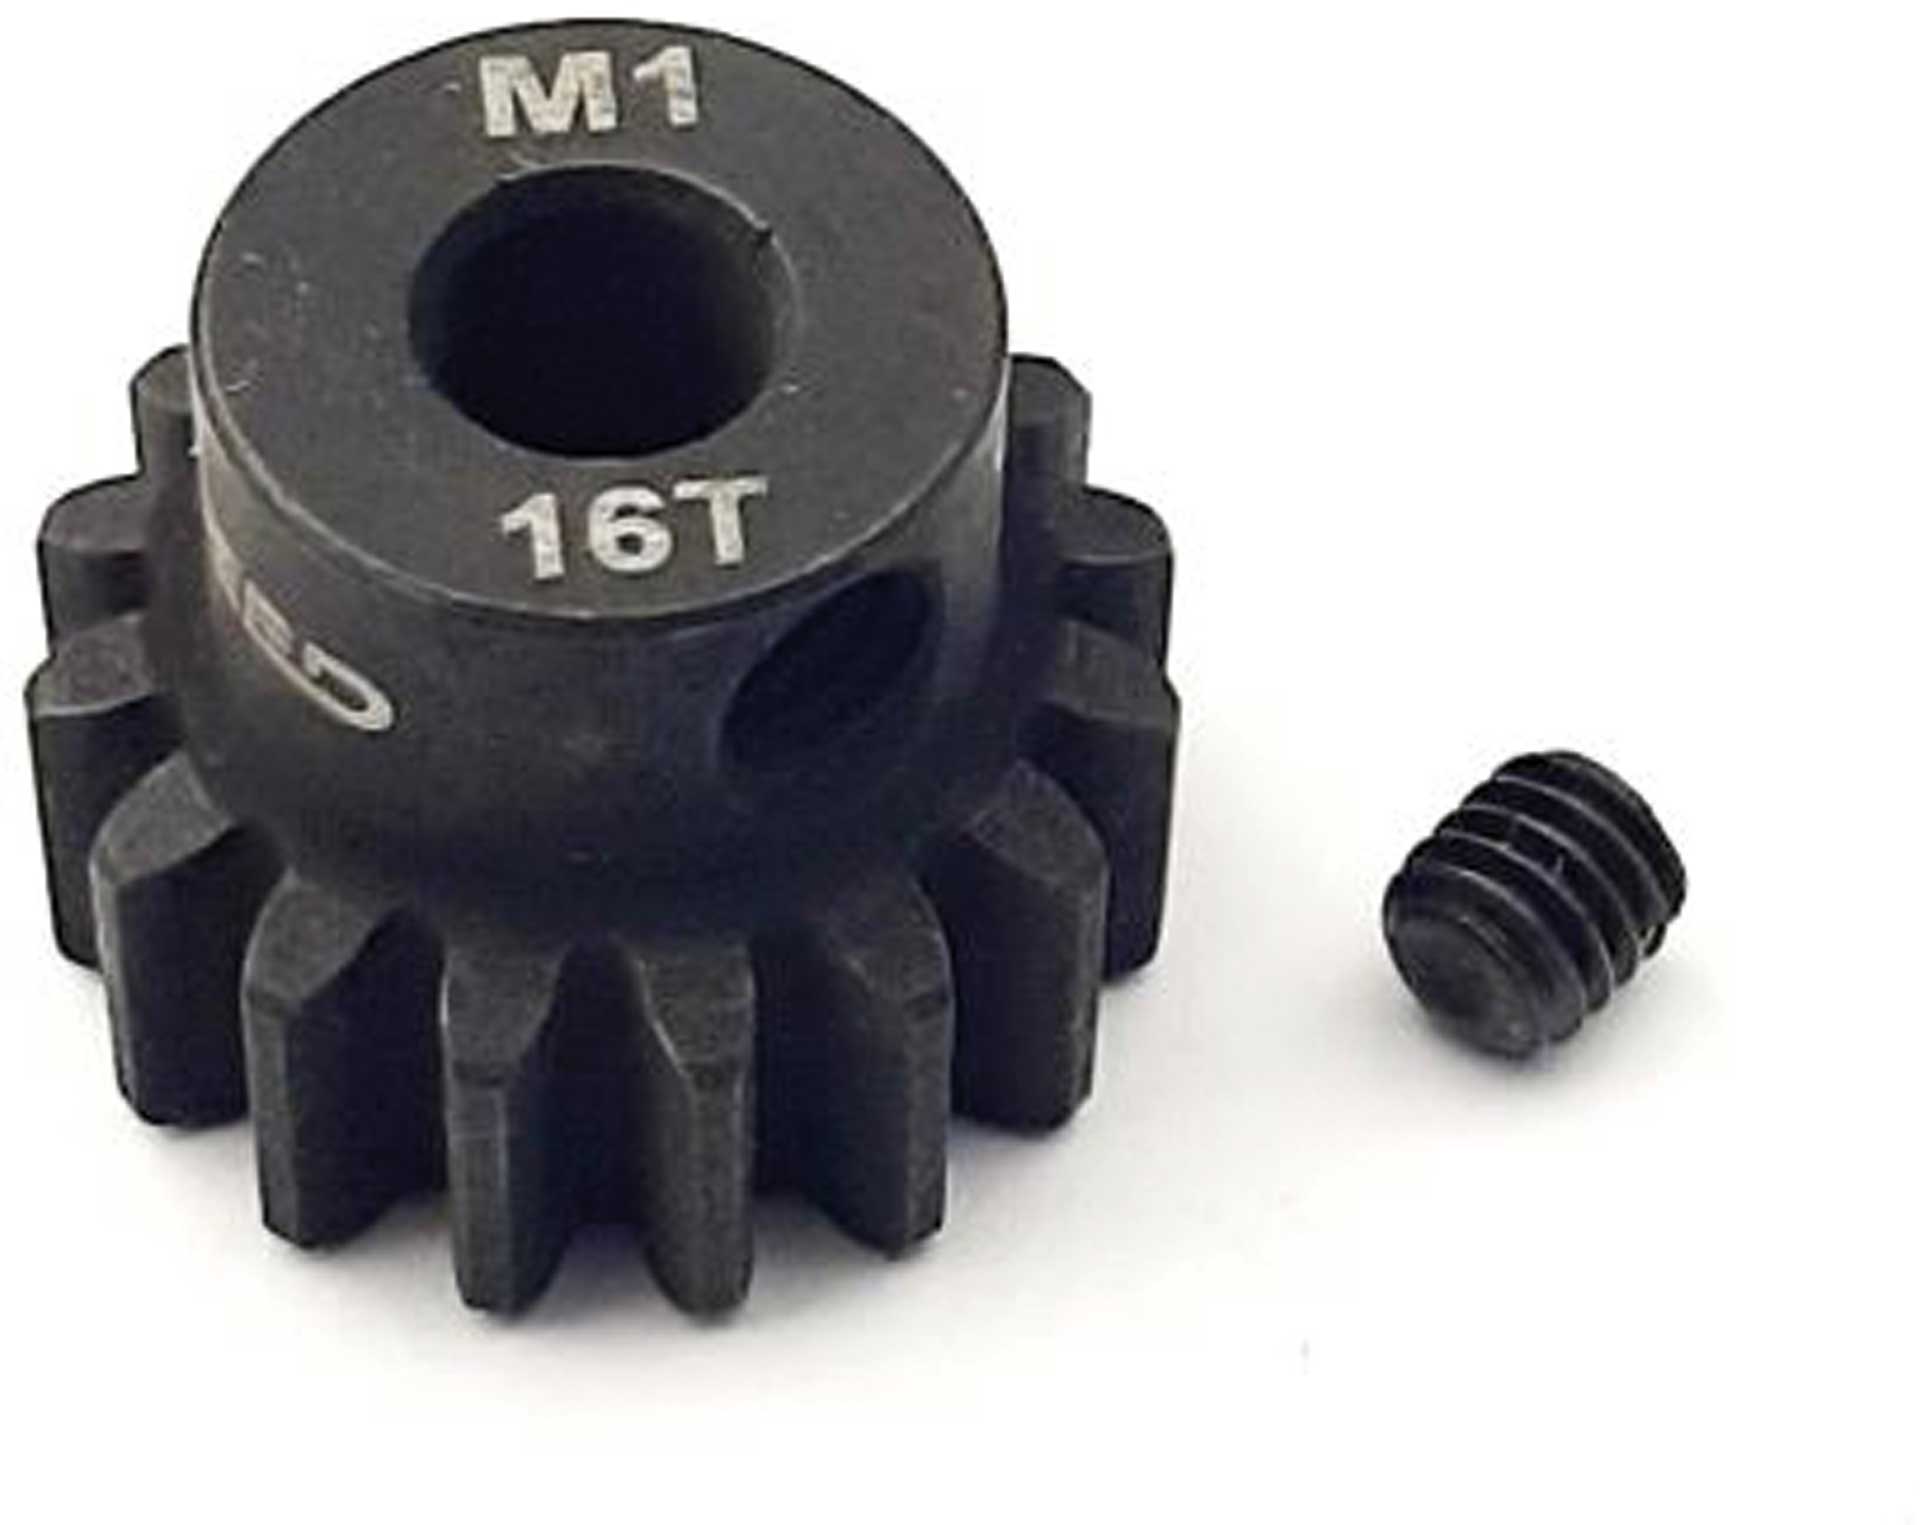 H-Speed Steel pinion 16 teeth Module 1 bore 5mm